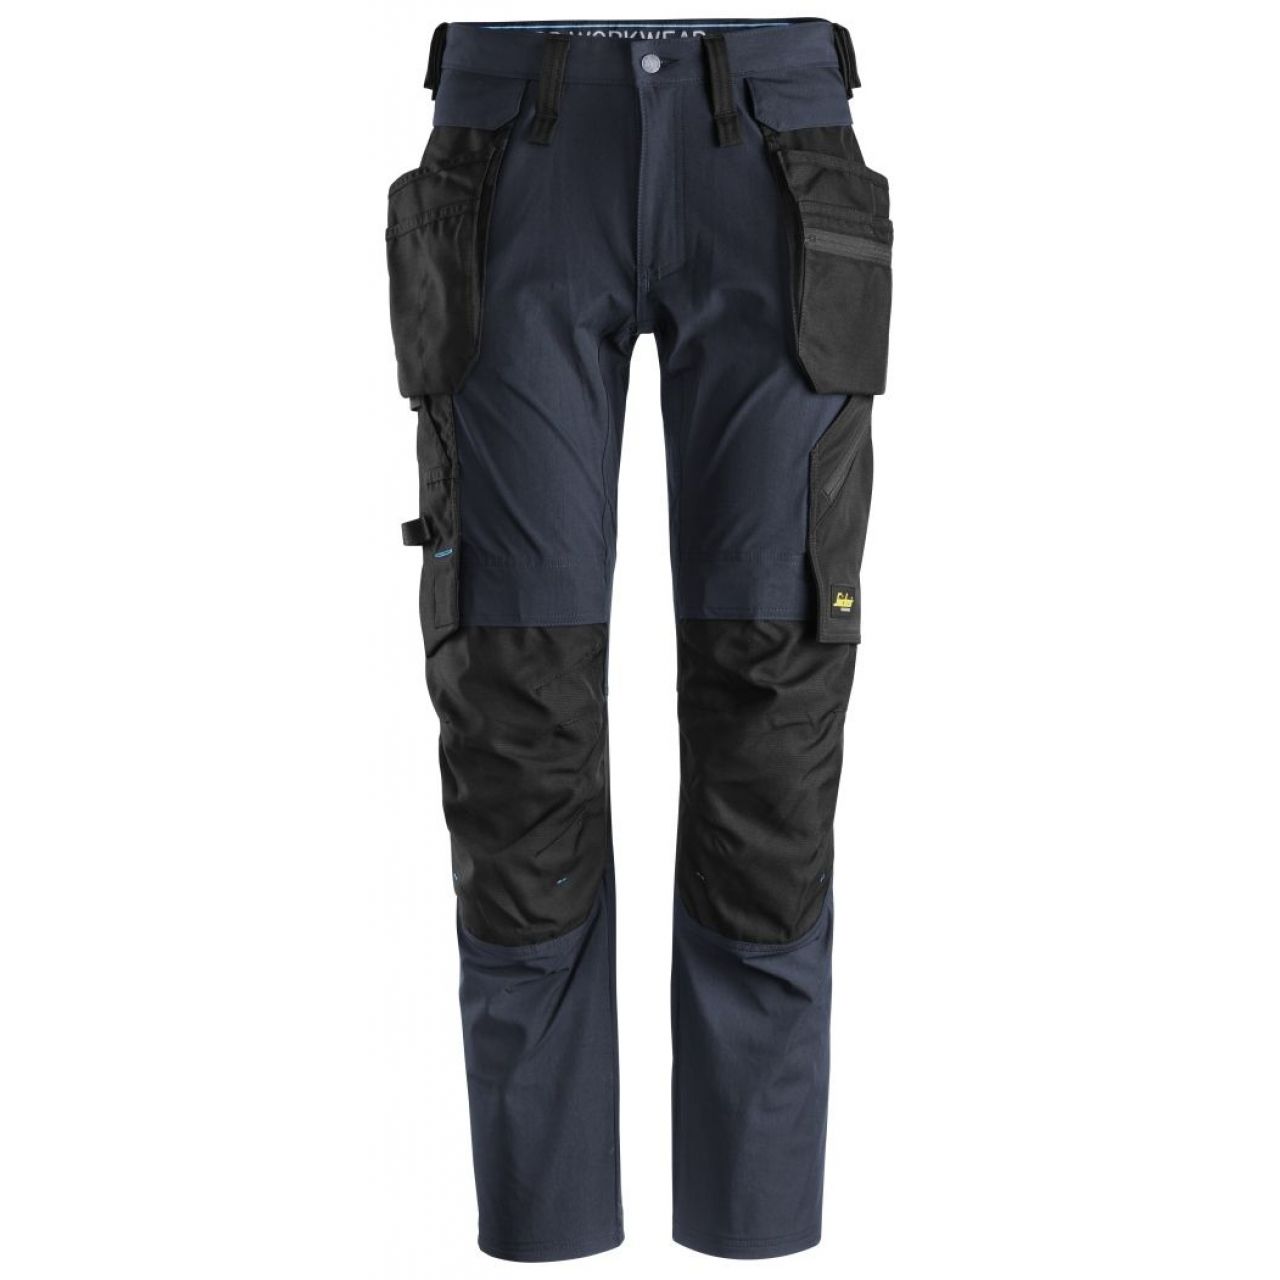 Pantalon + bolsillos flotantes desmontables LiteWork azul marino-negro talla 250